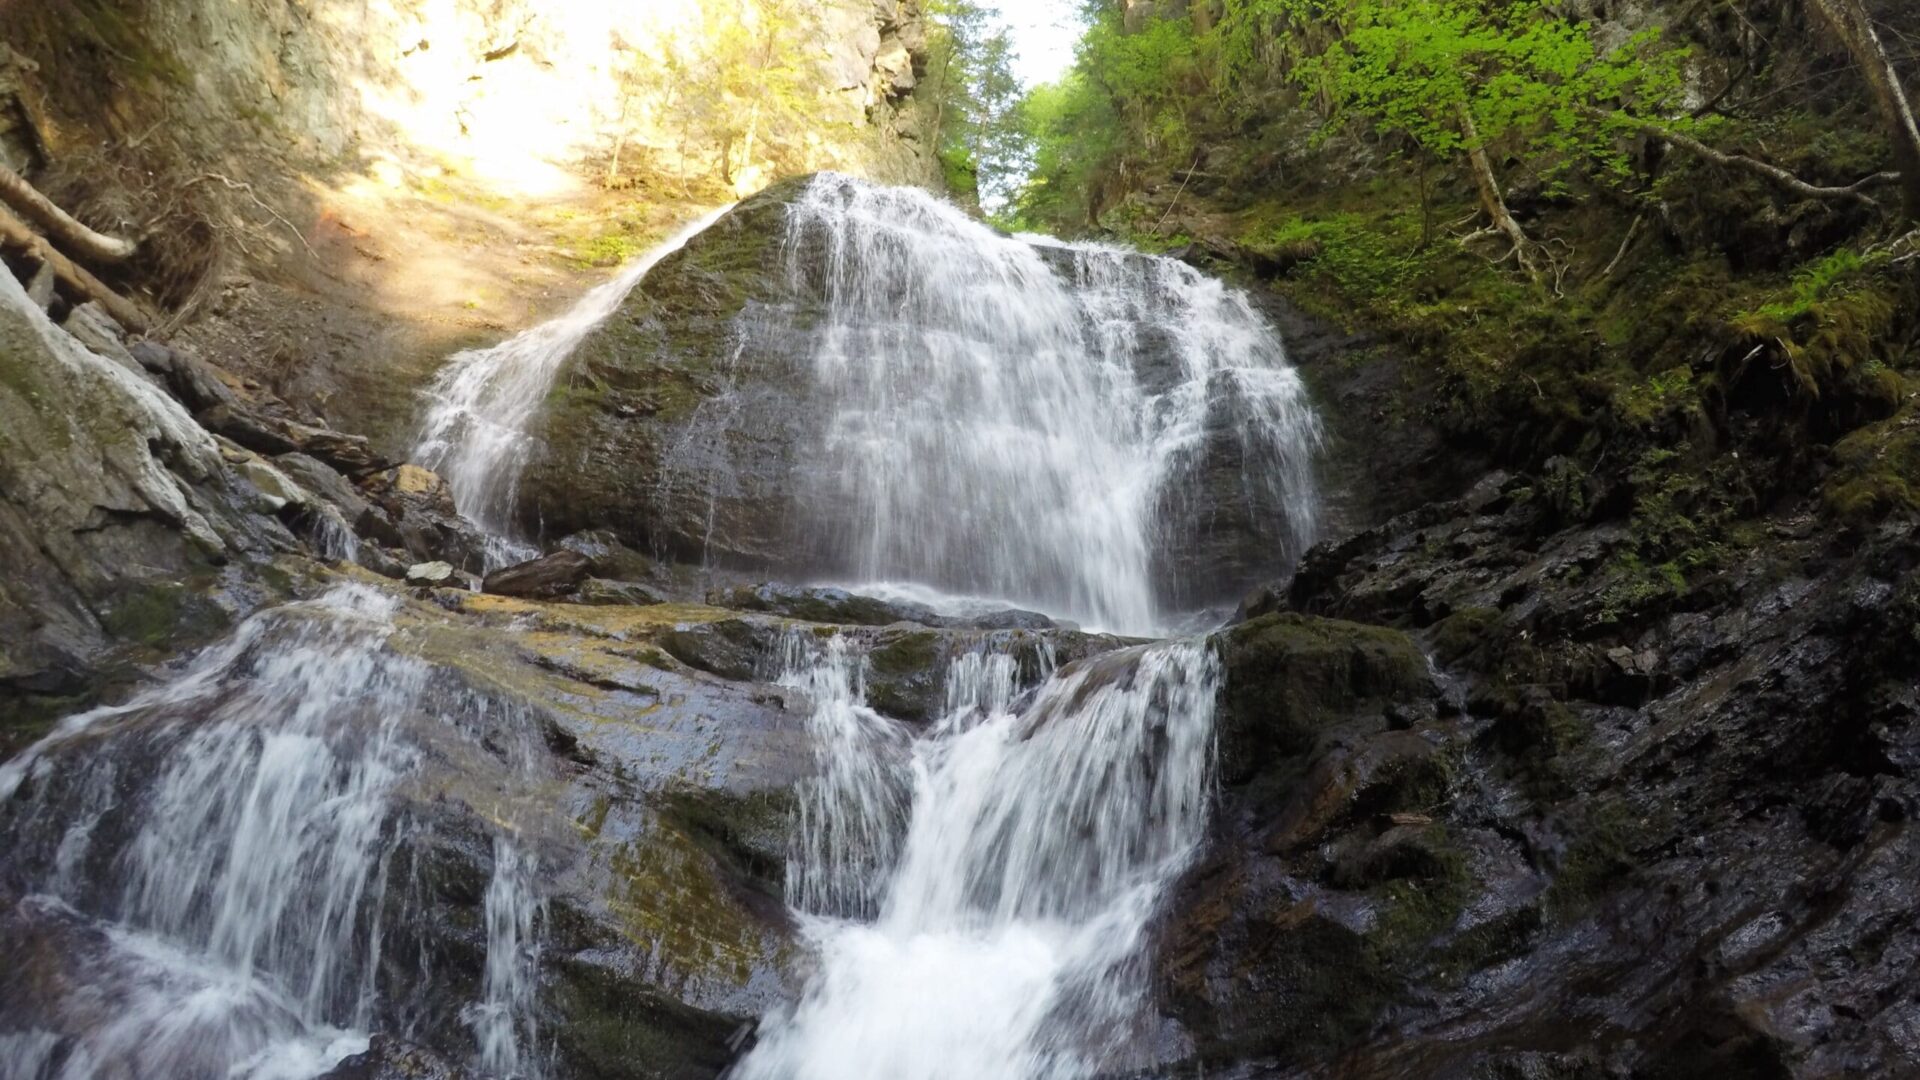 rushing waterfall at the Moss Glen Falls trail Stowe Vermont|rushing waterfall in Vermont|trail sign at Moss Glen Falls Trail Vermont|trail sign at Moss Glen Falls Trail Stowe Vermont